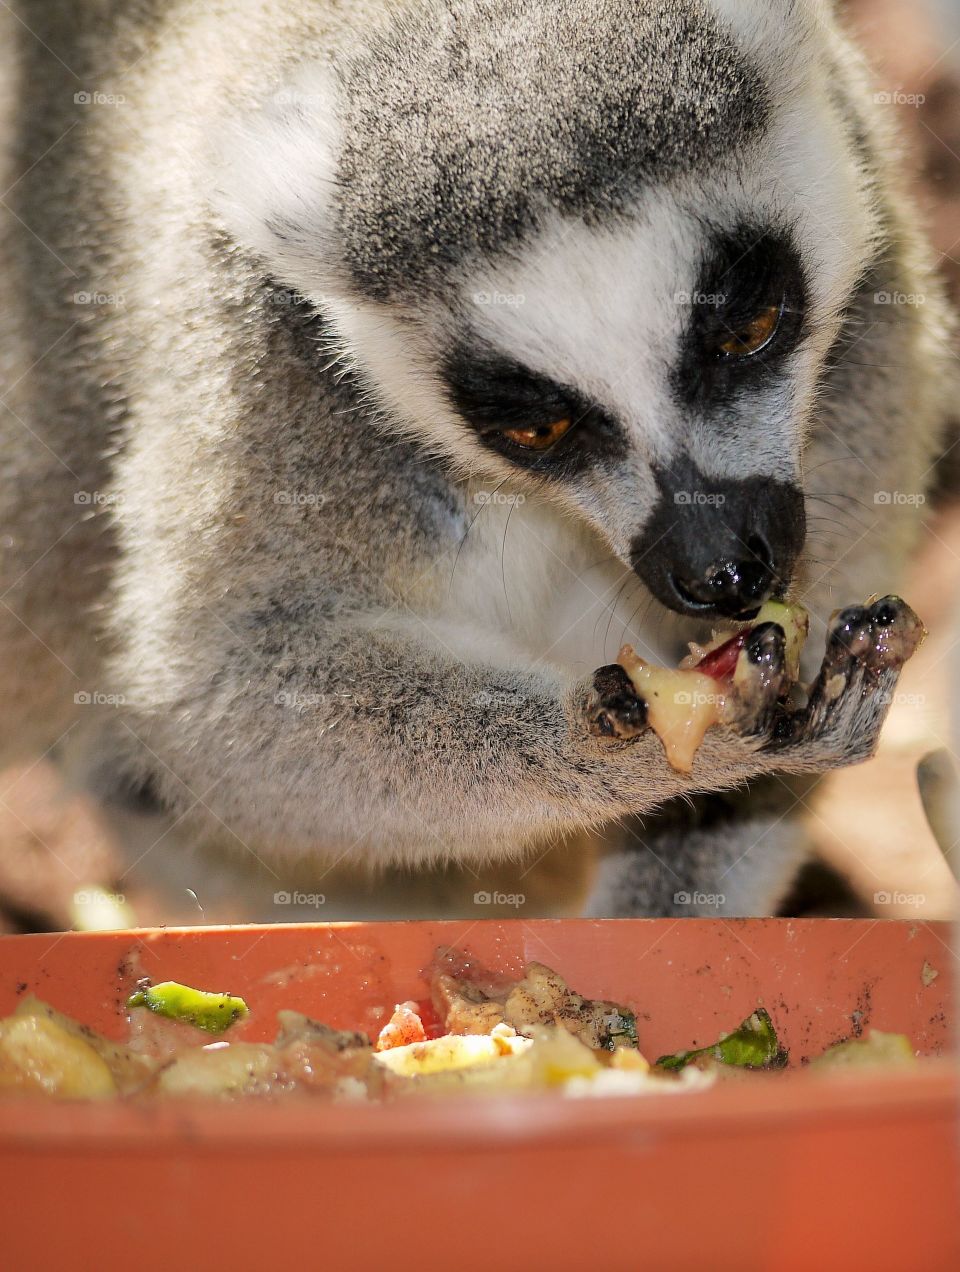 Lemur Eating Fruit. This is a closeup of a Lemur eating